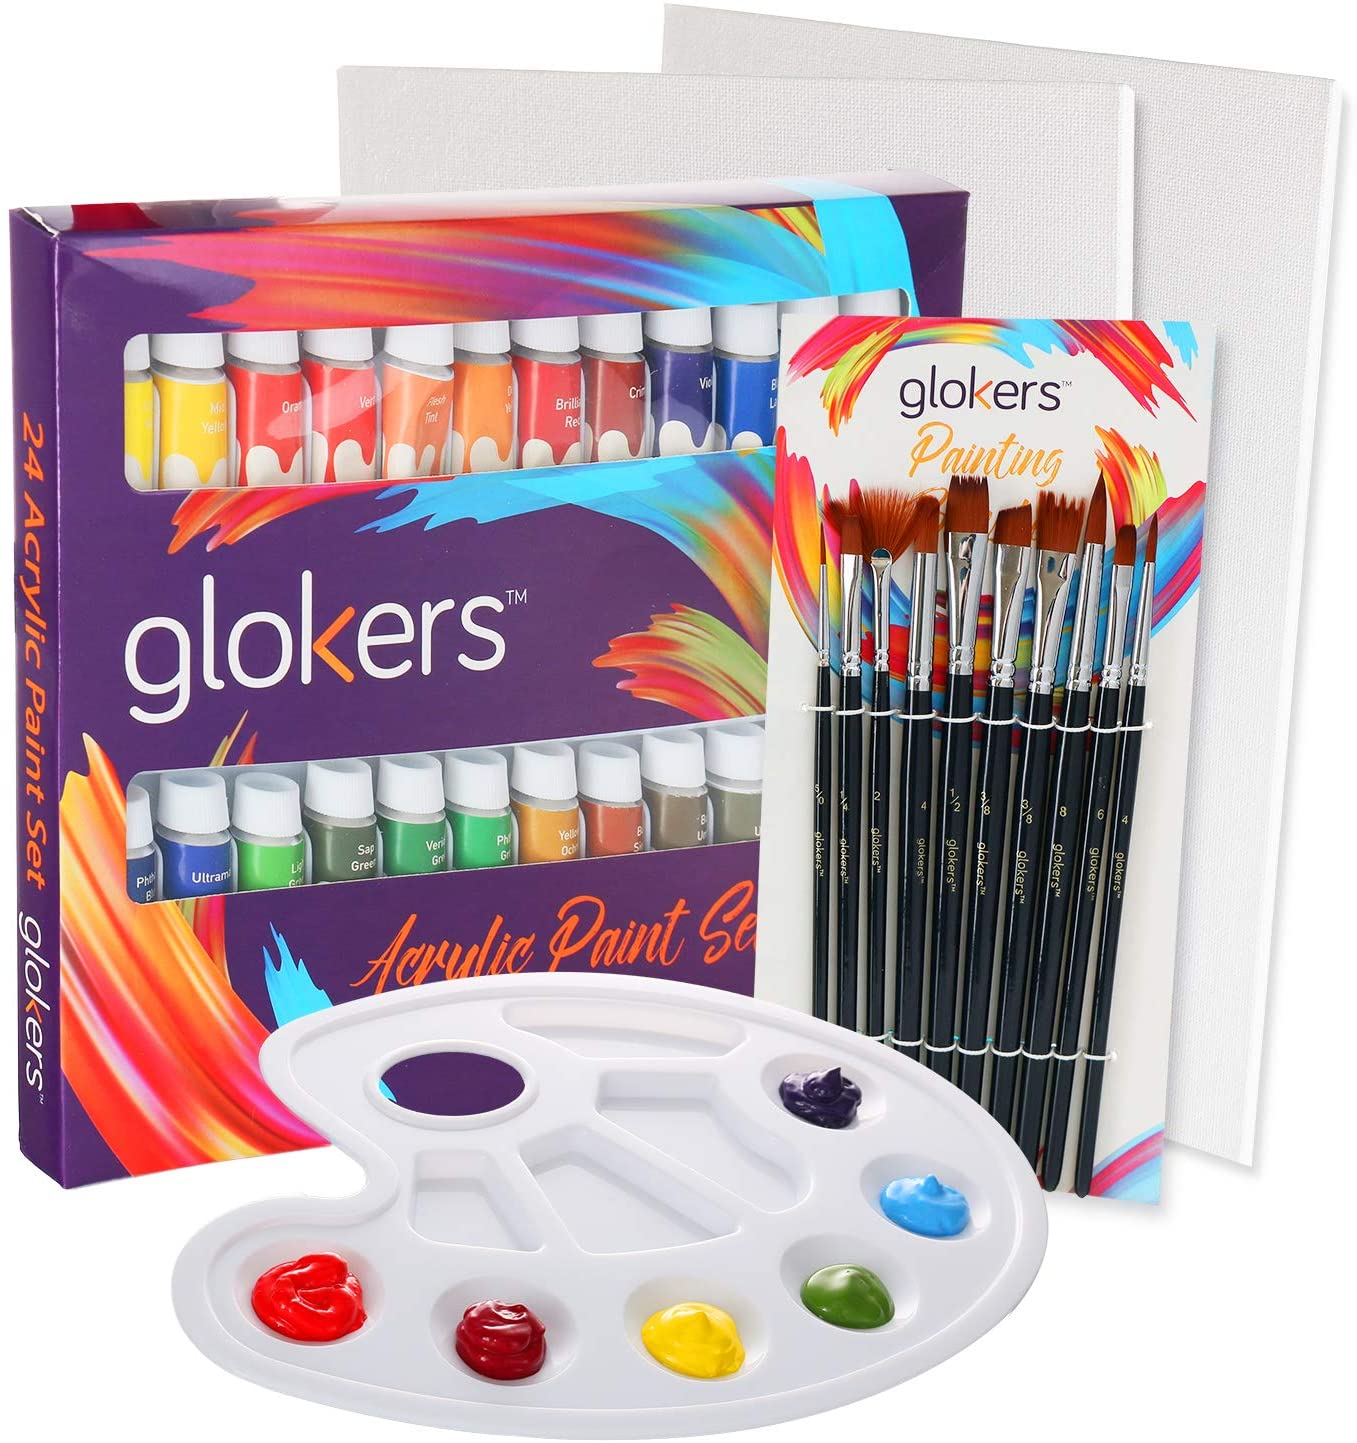 Premium Acrylic Paint Set - 24 Acrylic Paint Color Tubes, 10 Professional Paintbrushes, 2 Blank Canvas Panels, Plastic Palette, by Glokers